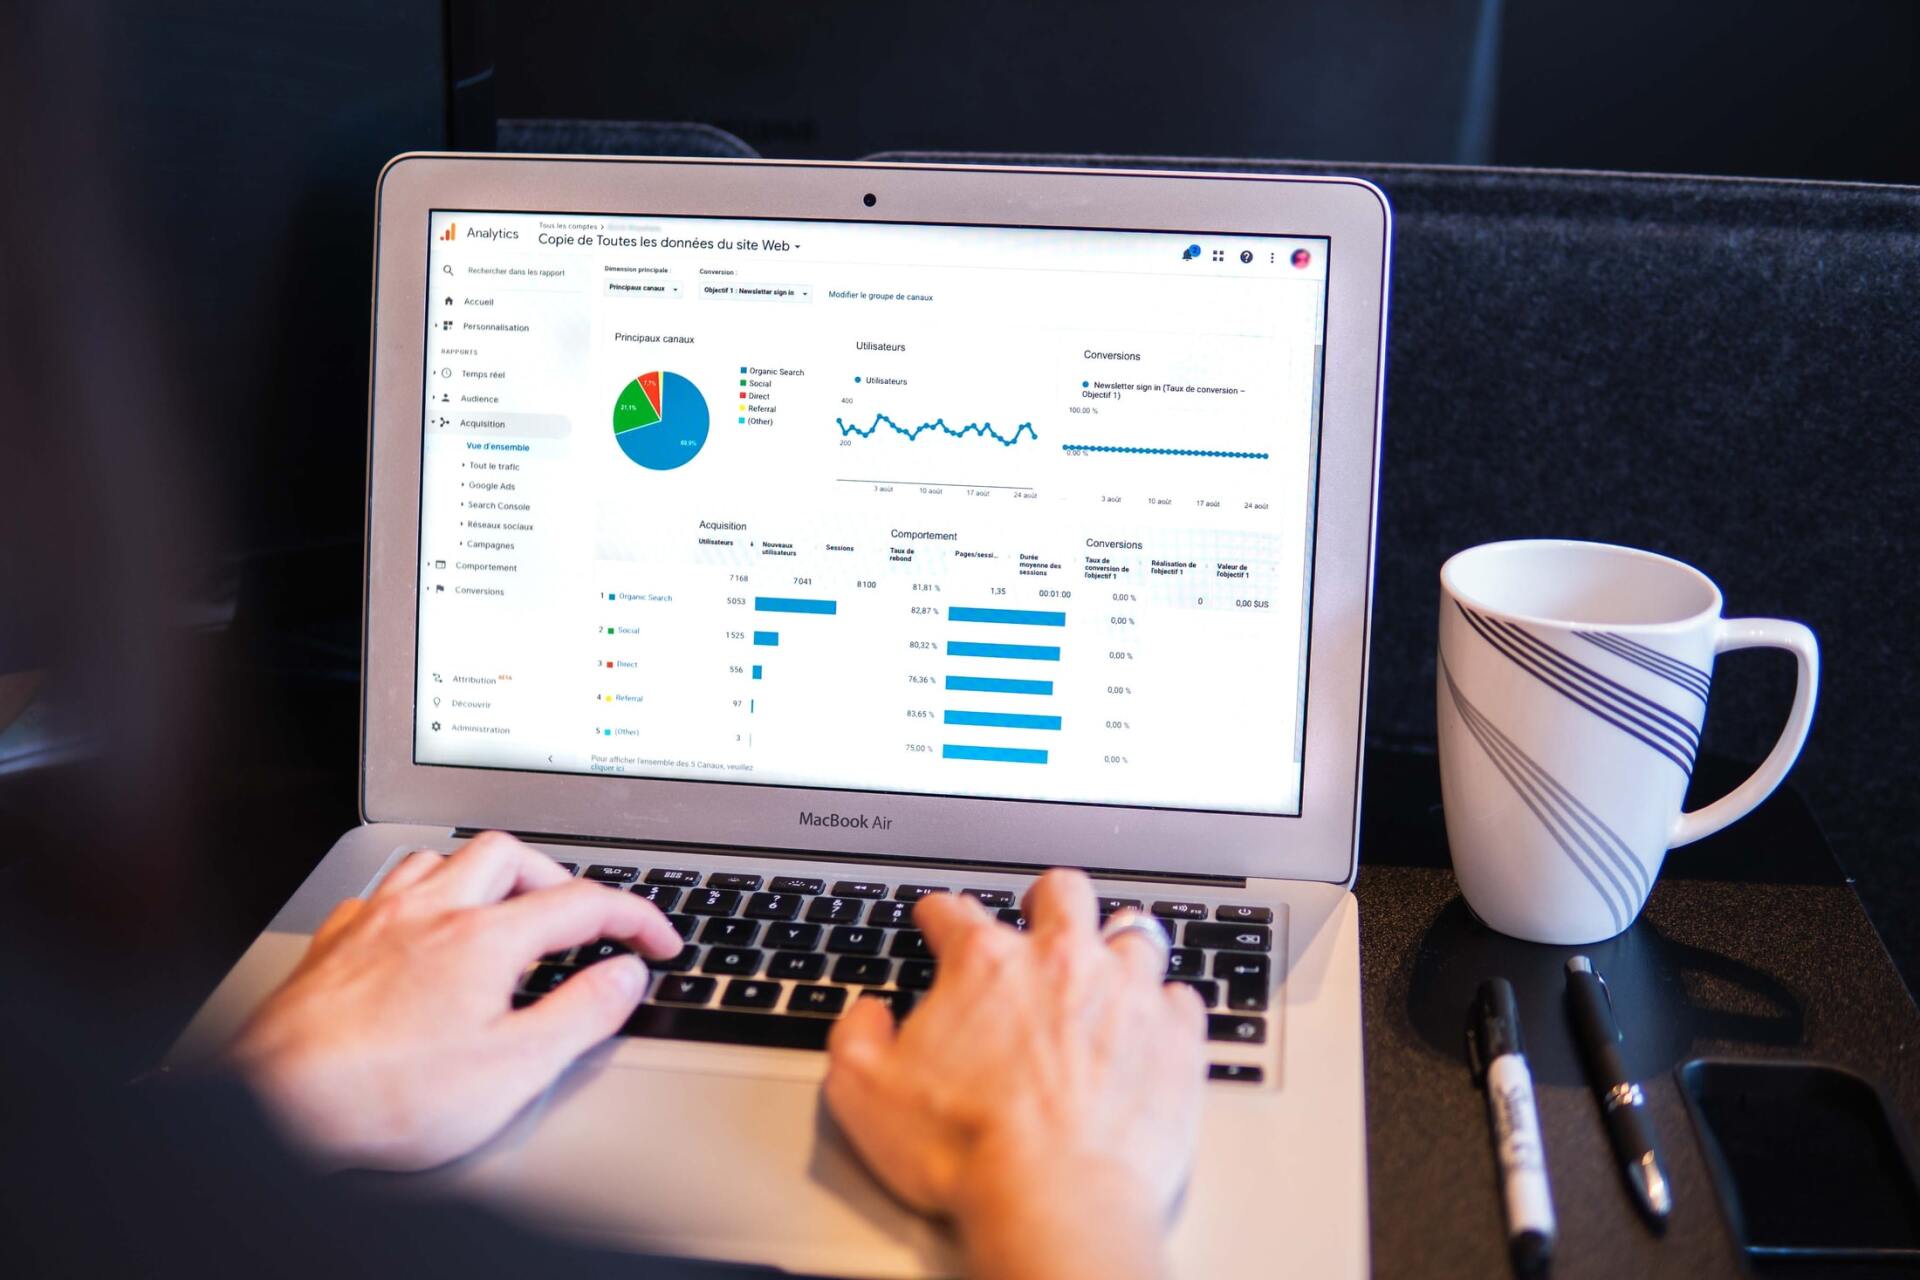 Google Analytics dashboard display on a laptop